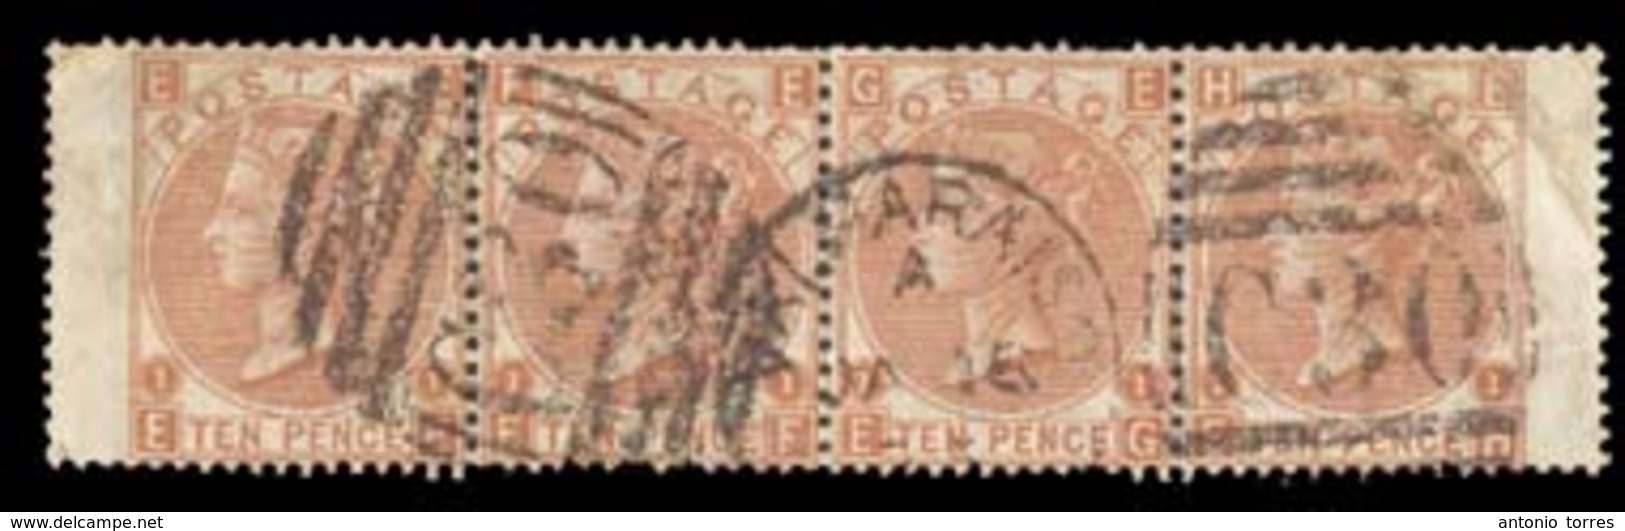 CHILE. 1875. BPO/Valparaiso . GB 10d Plate 1. Horizontal STRIP OF FOUR, Cancelled C-30 + Cds Valparaiso.Exceedingly Scar - Cile